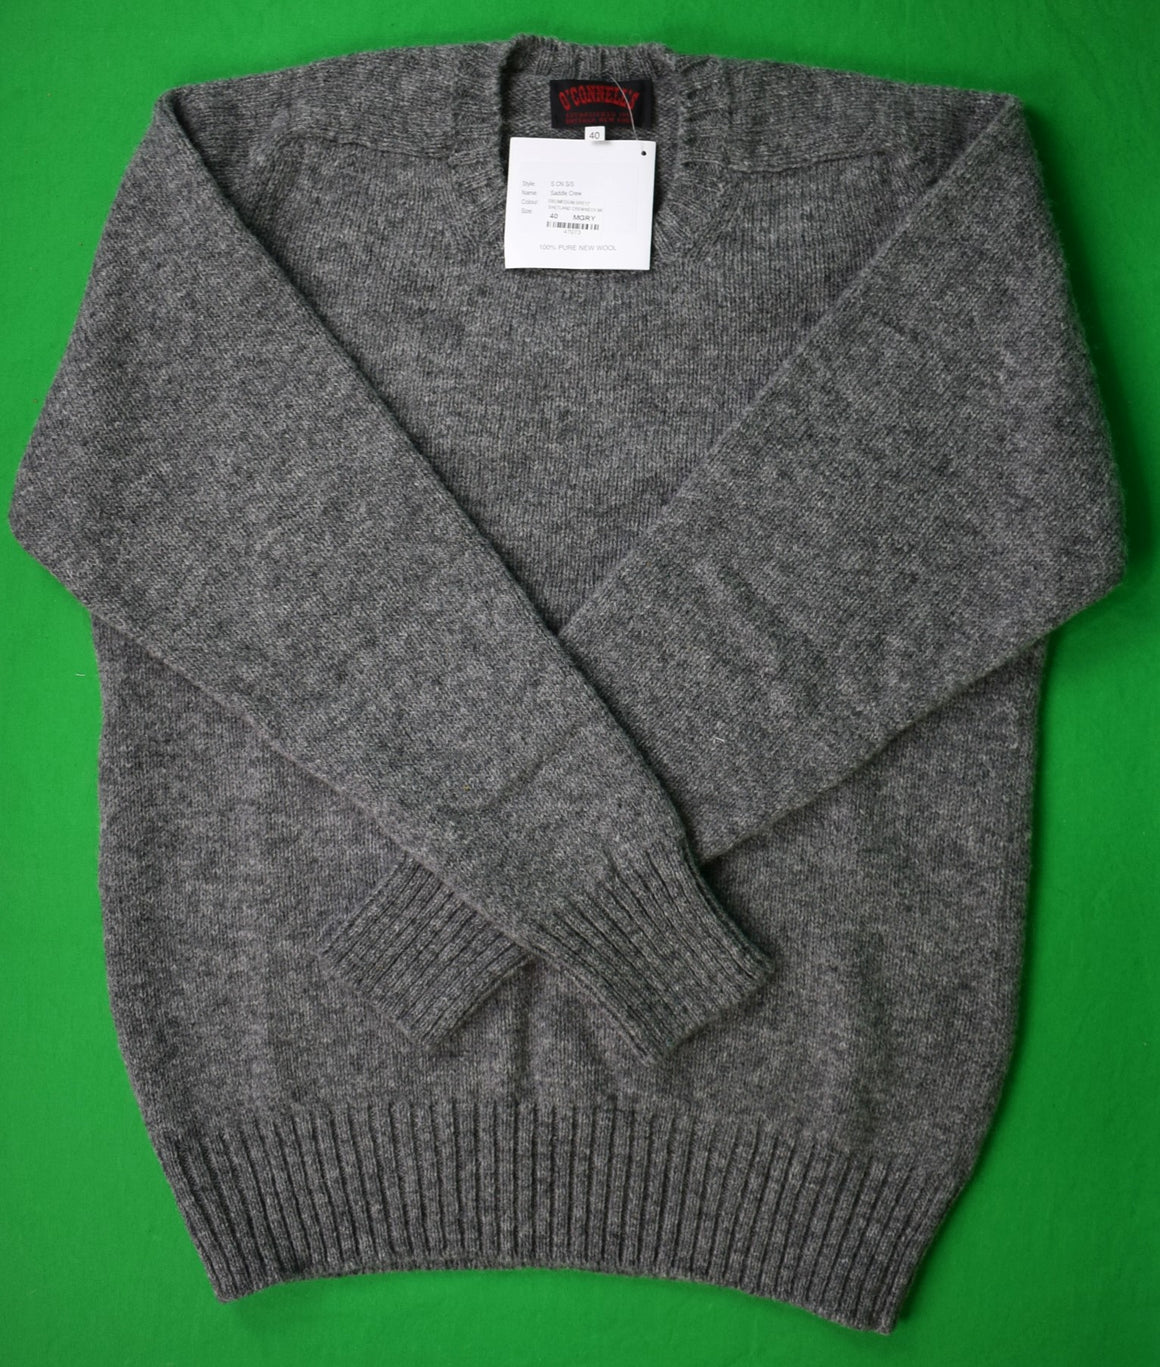 "O'Connell's Medium Grey Shetland Crewneck Sweater" Sz 40 (New w/ Tag) (SOLD)